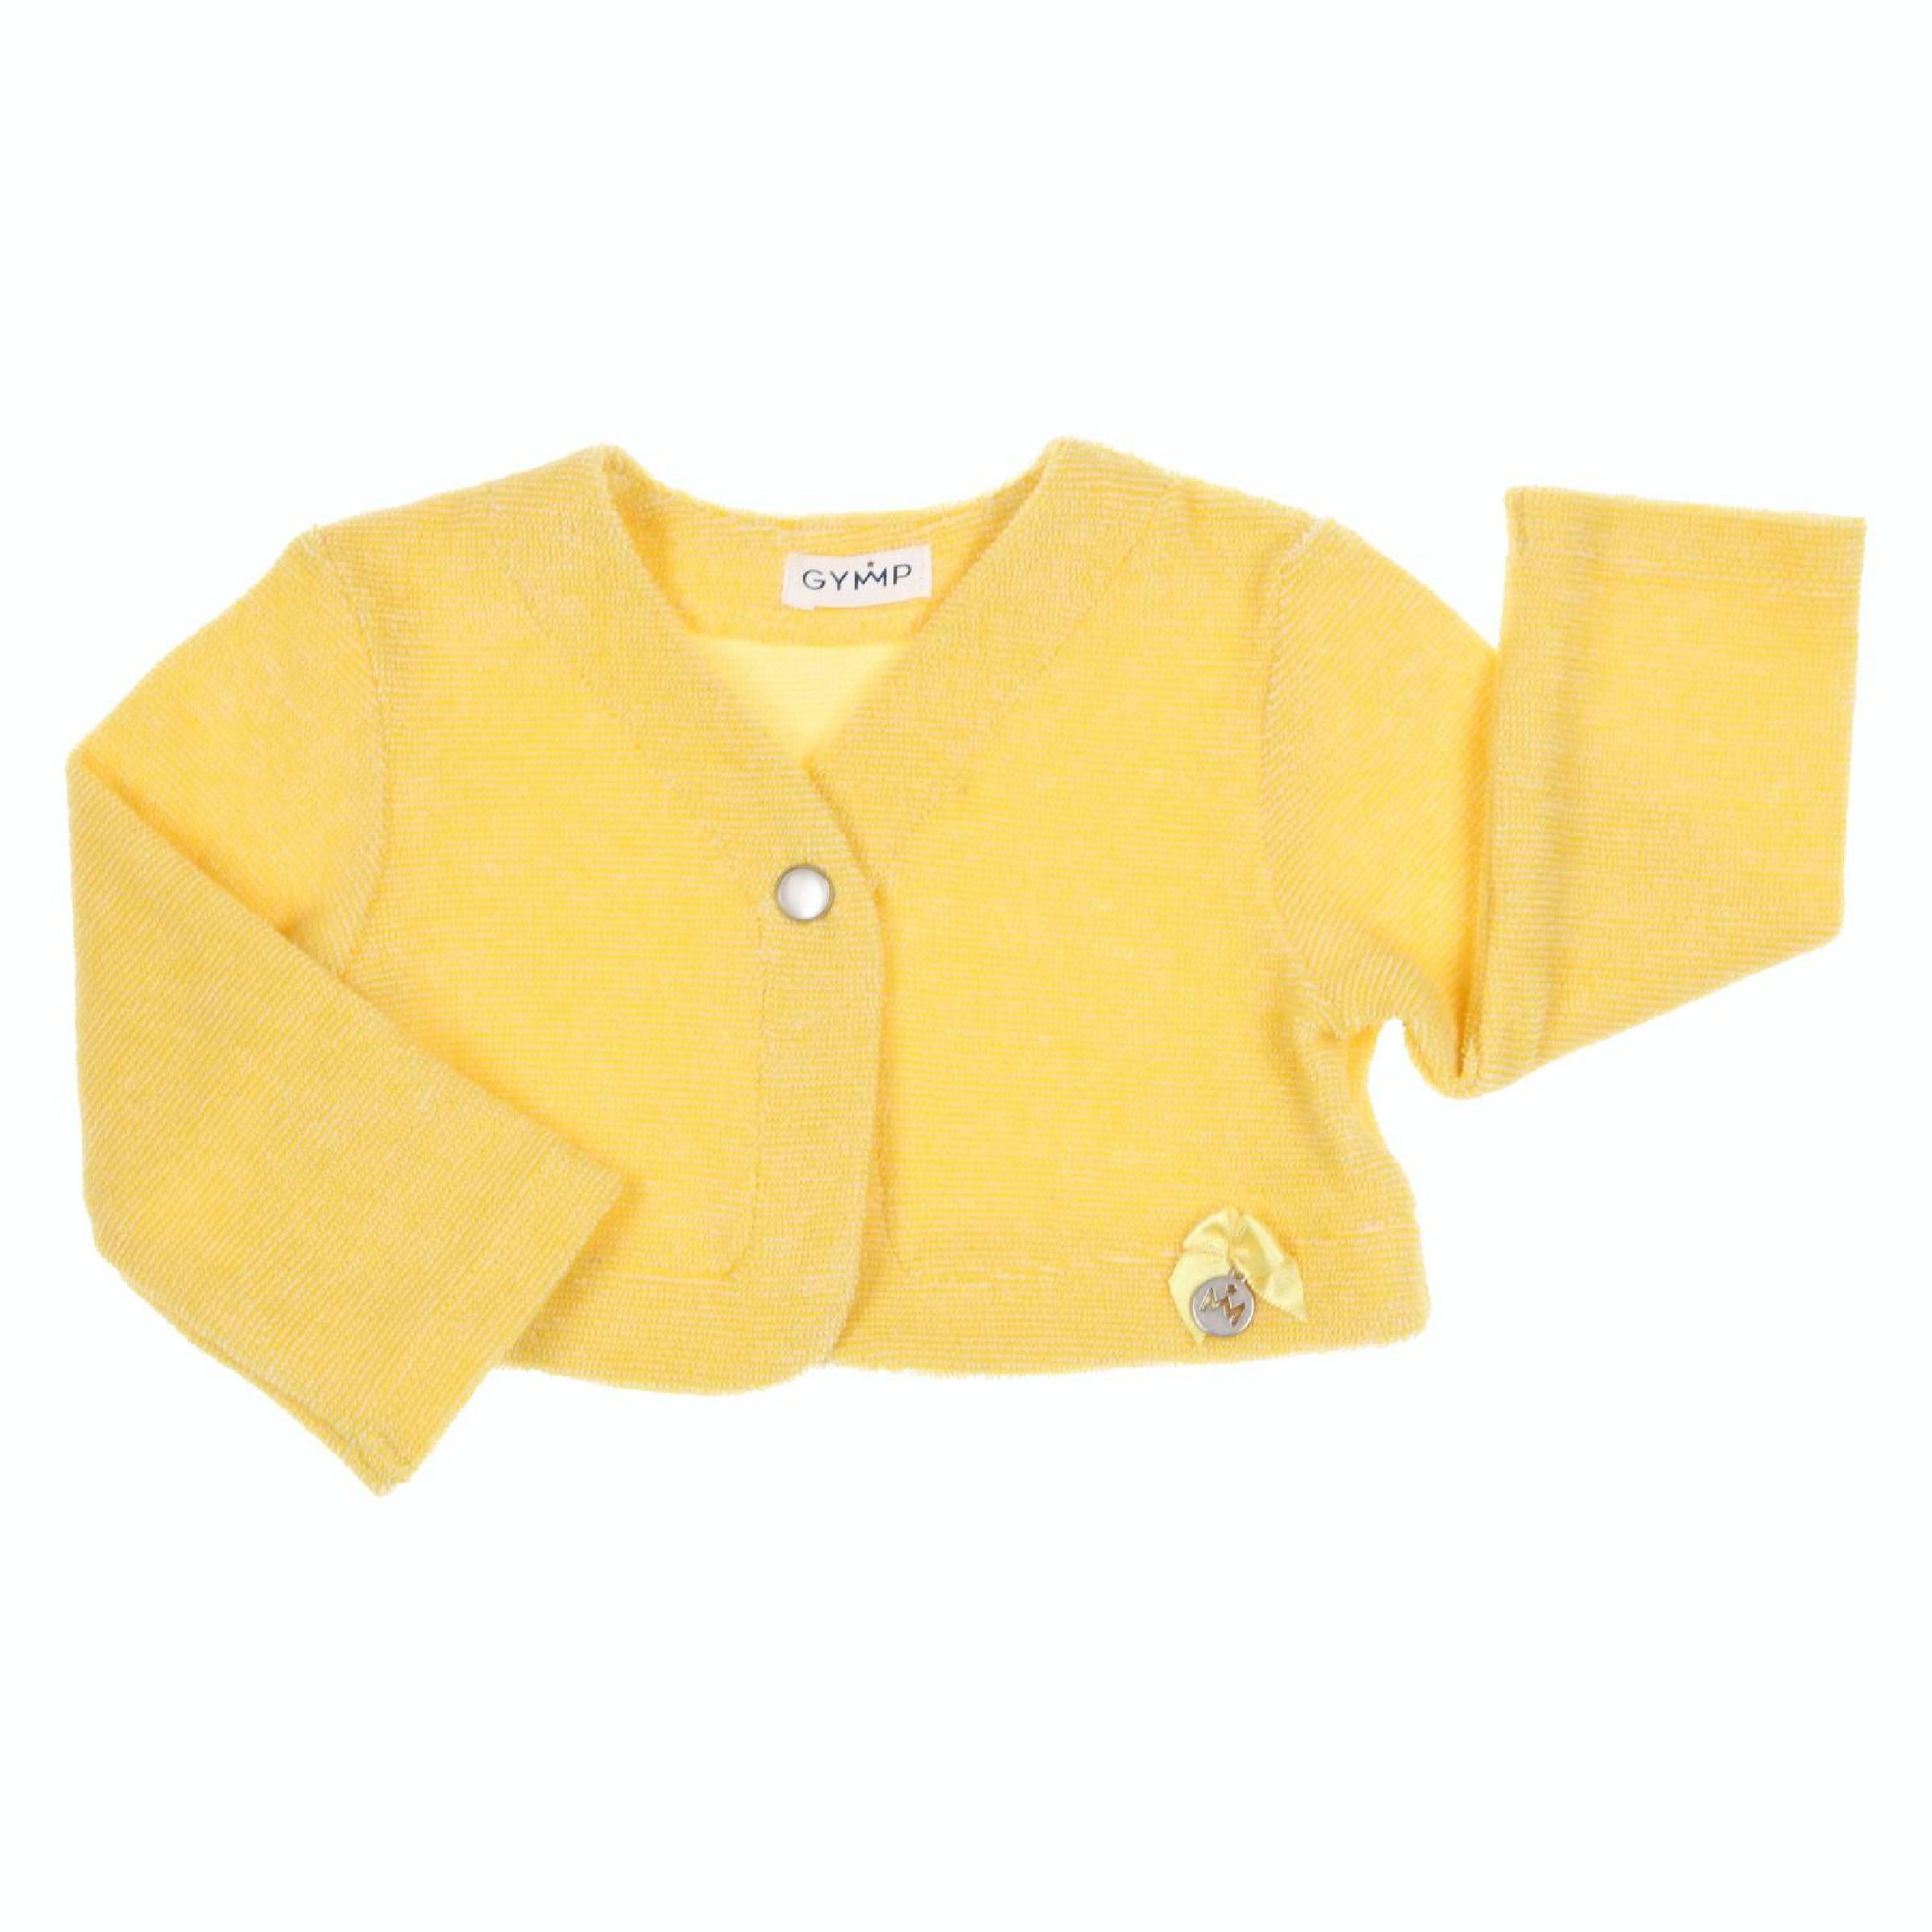 Baby meisjes CARDIGAN BOLERO - CHIARA - PRE van Gymp in de kleur Geel in maat 86.